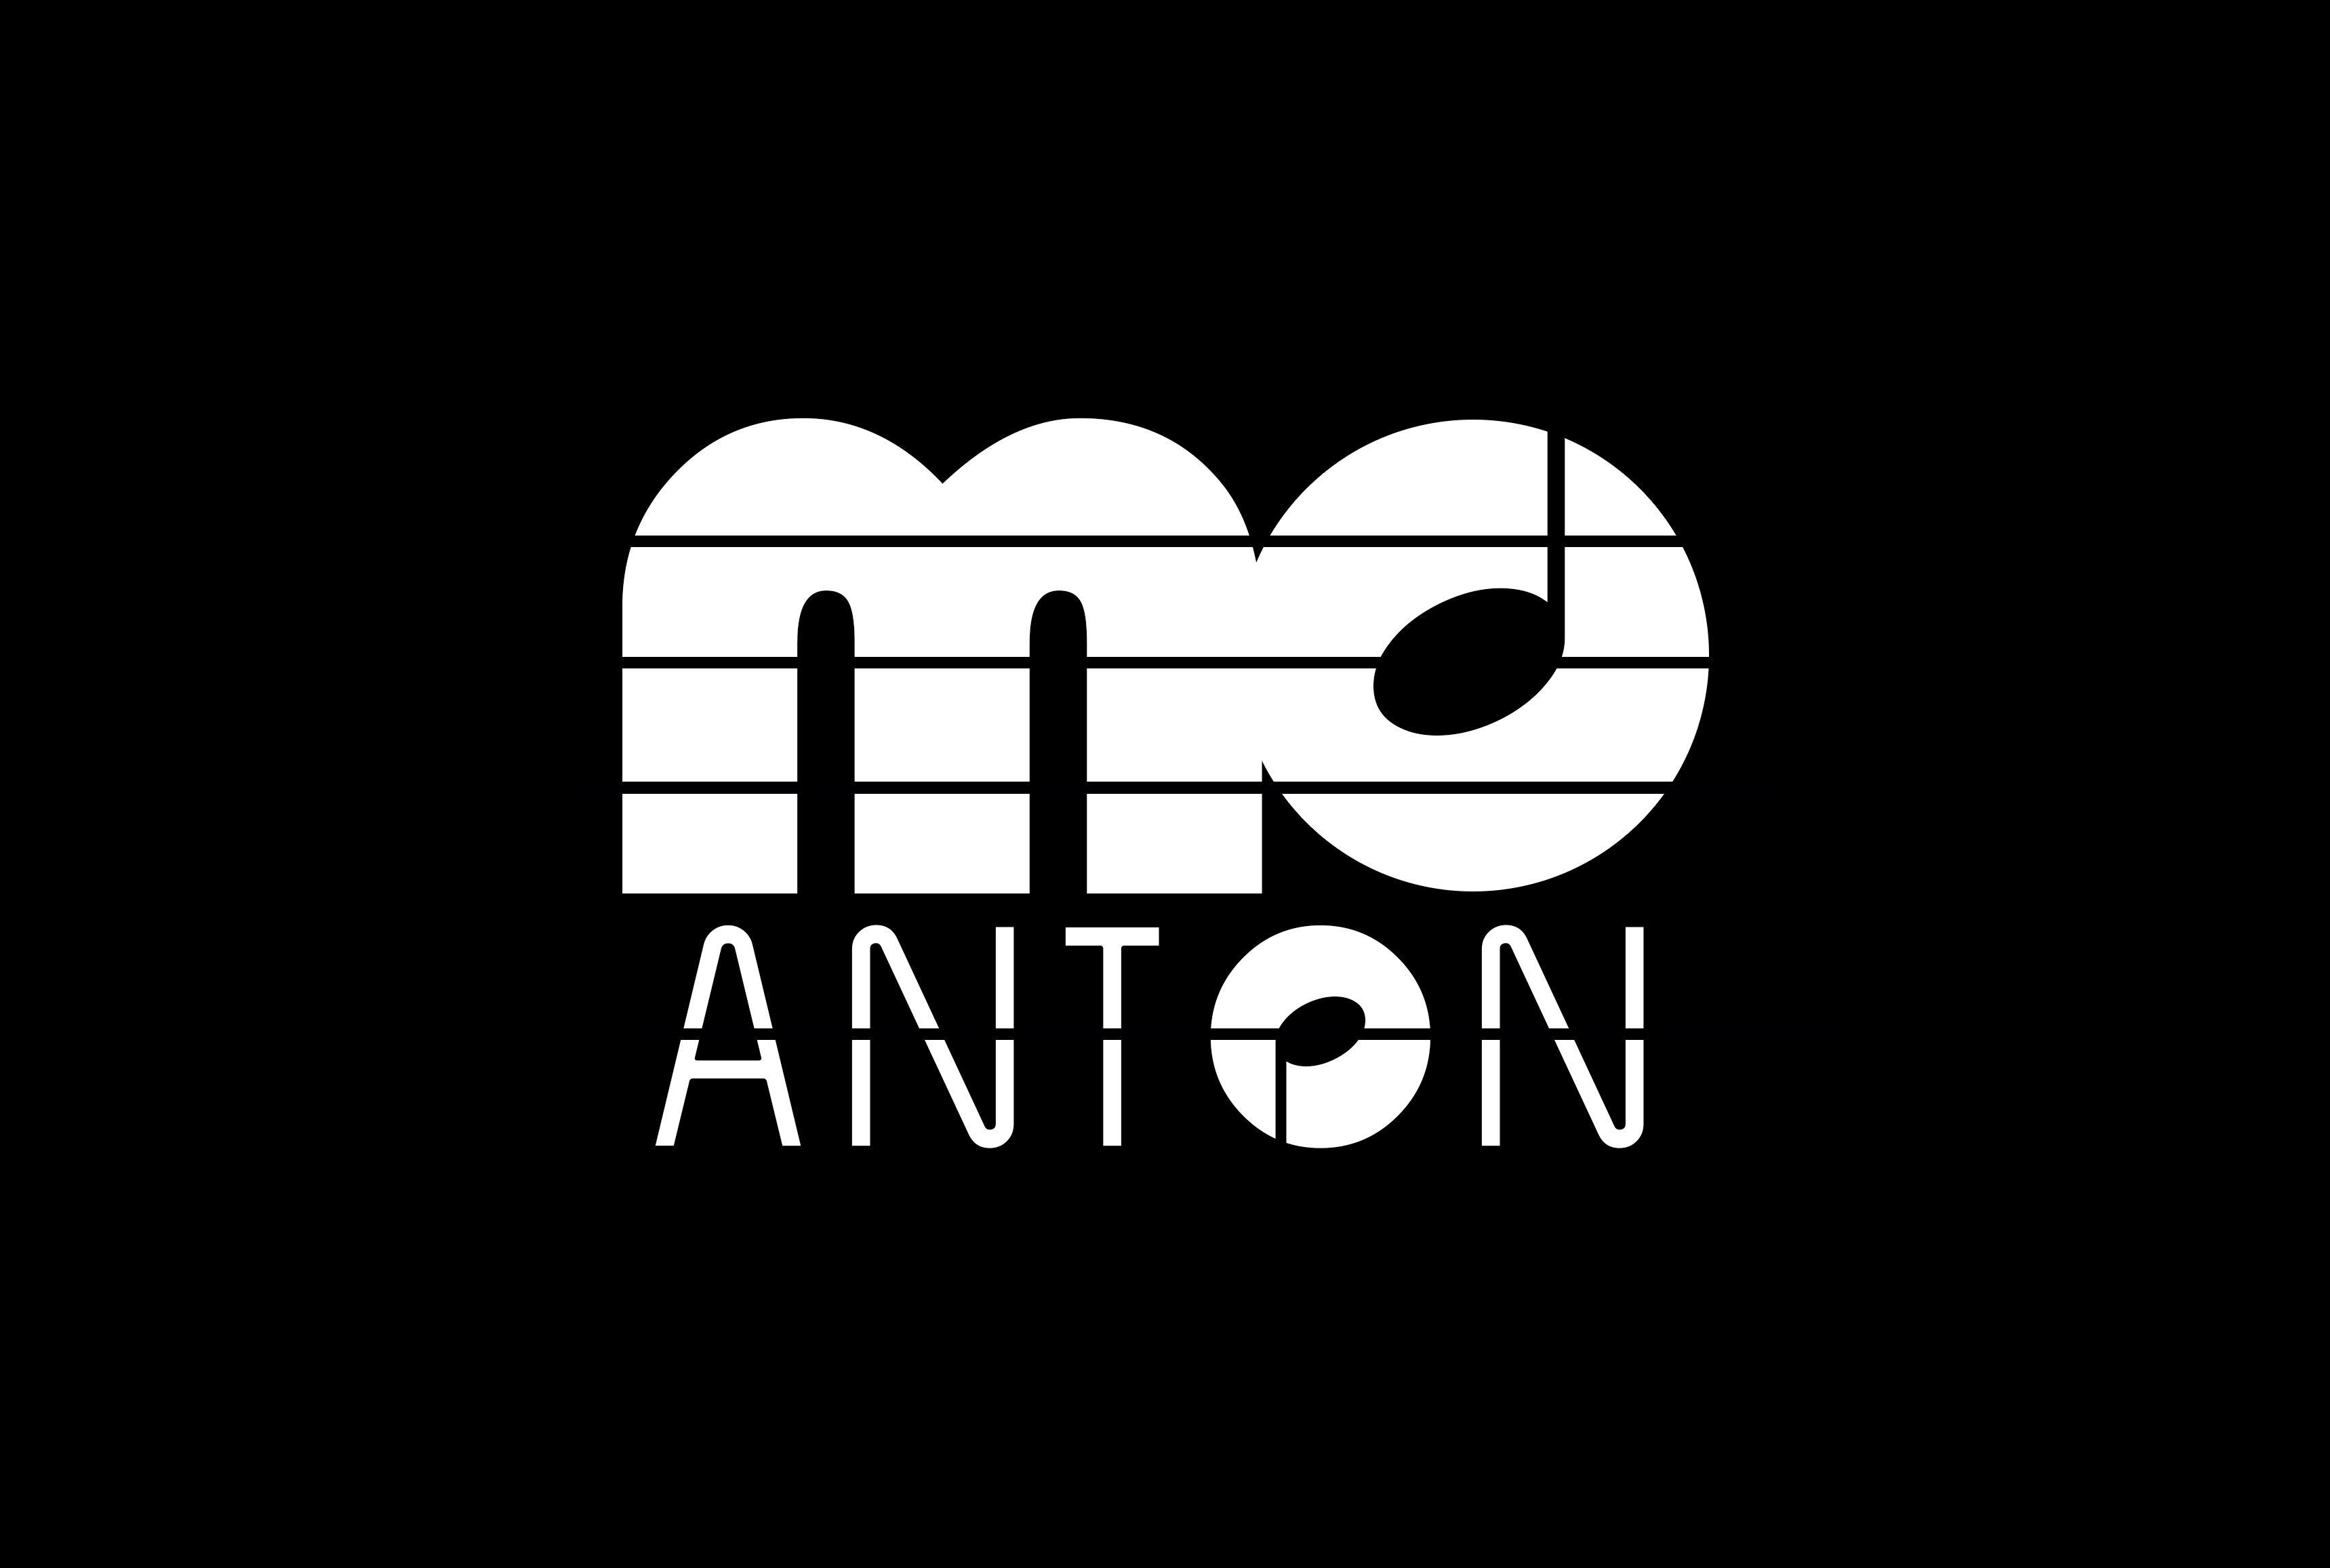 Anton Logo - Do you like the new Mo Anton logo?